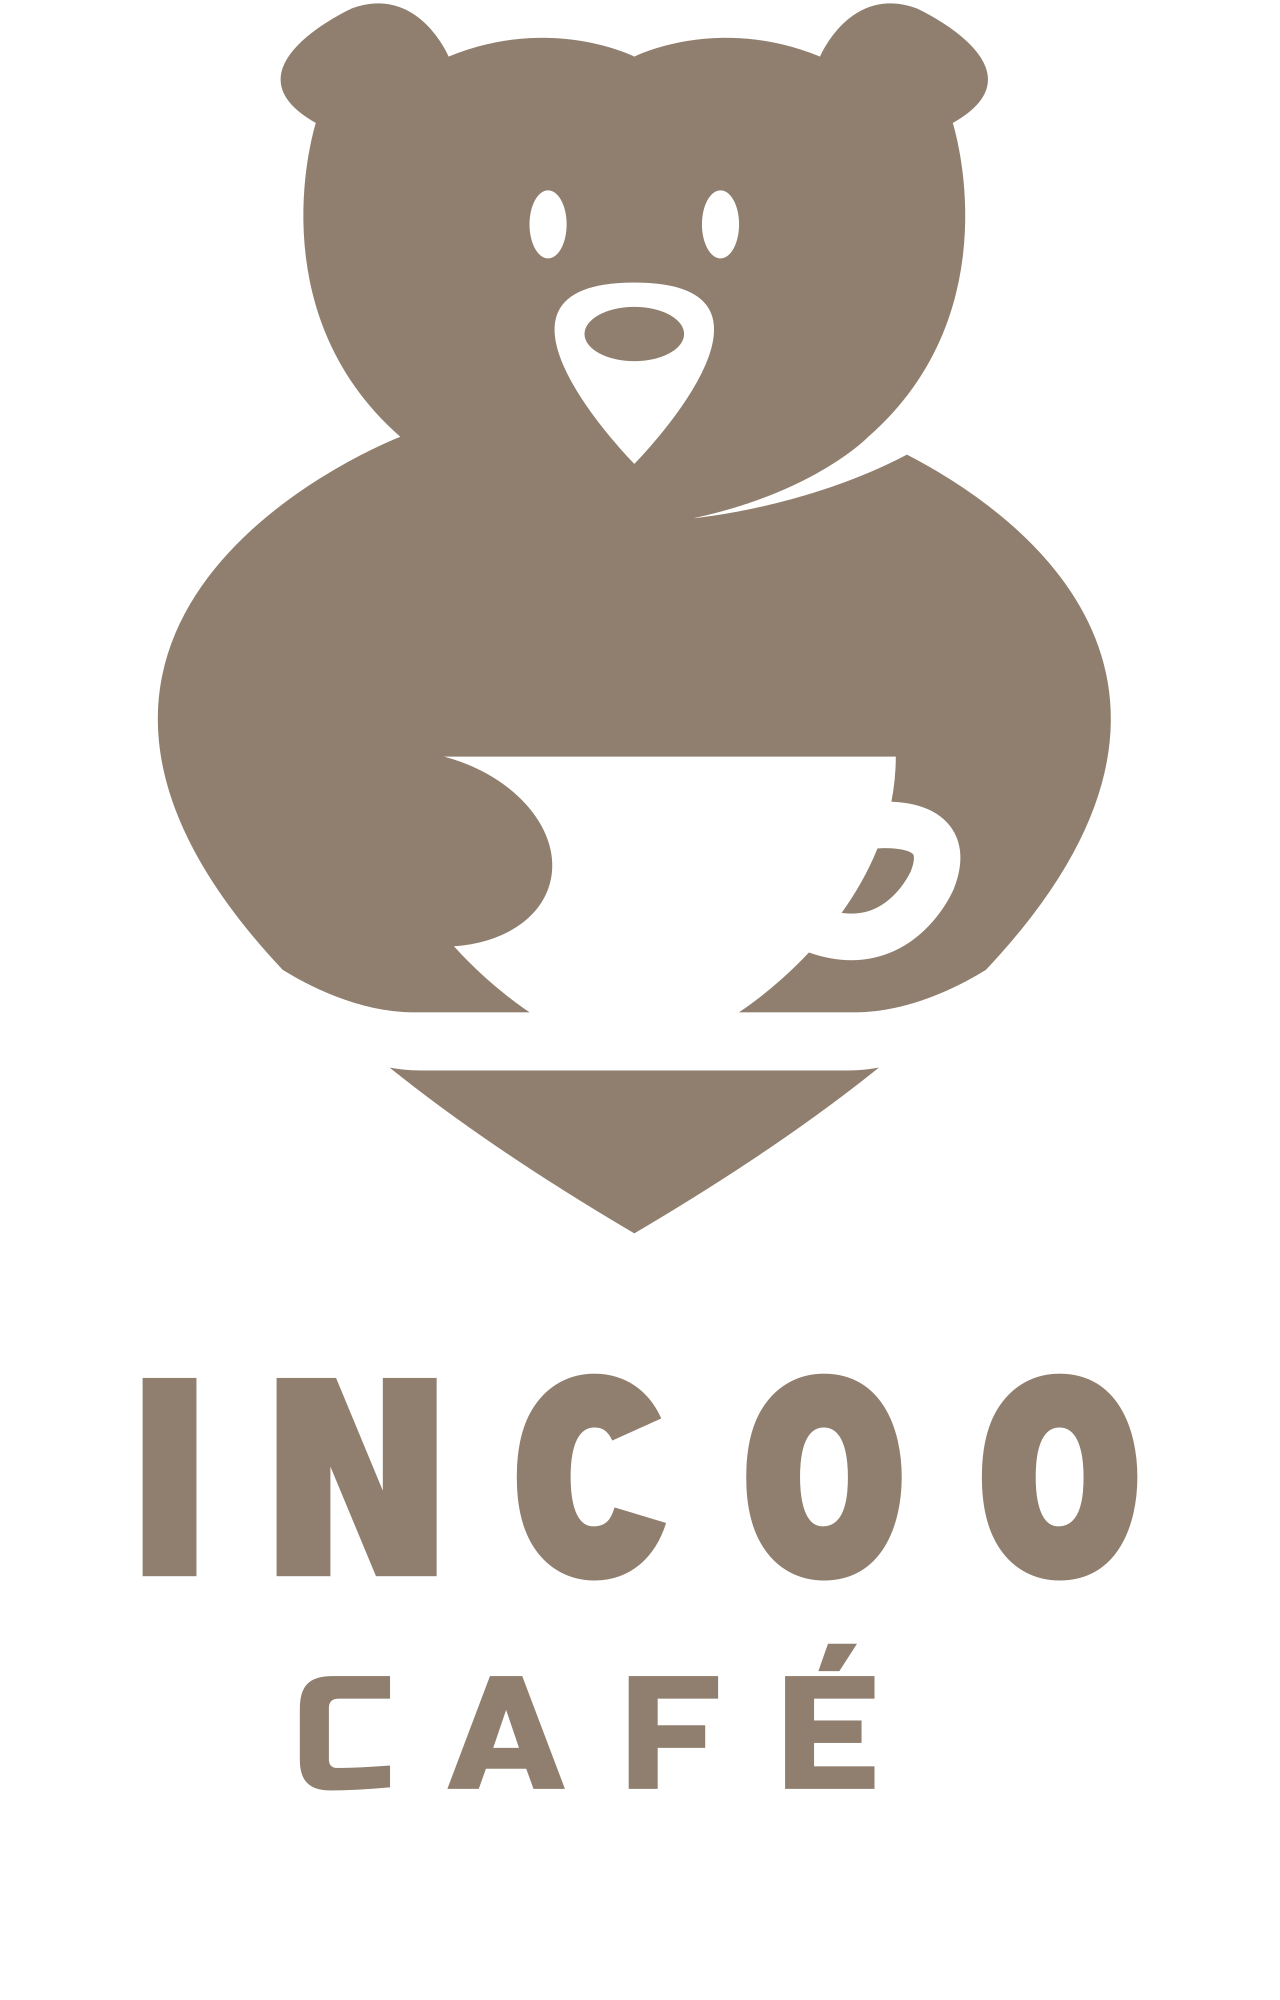 InCoo's logo